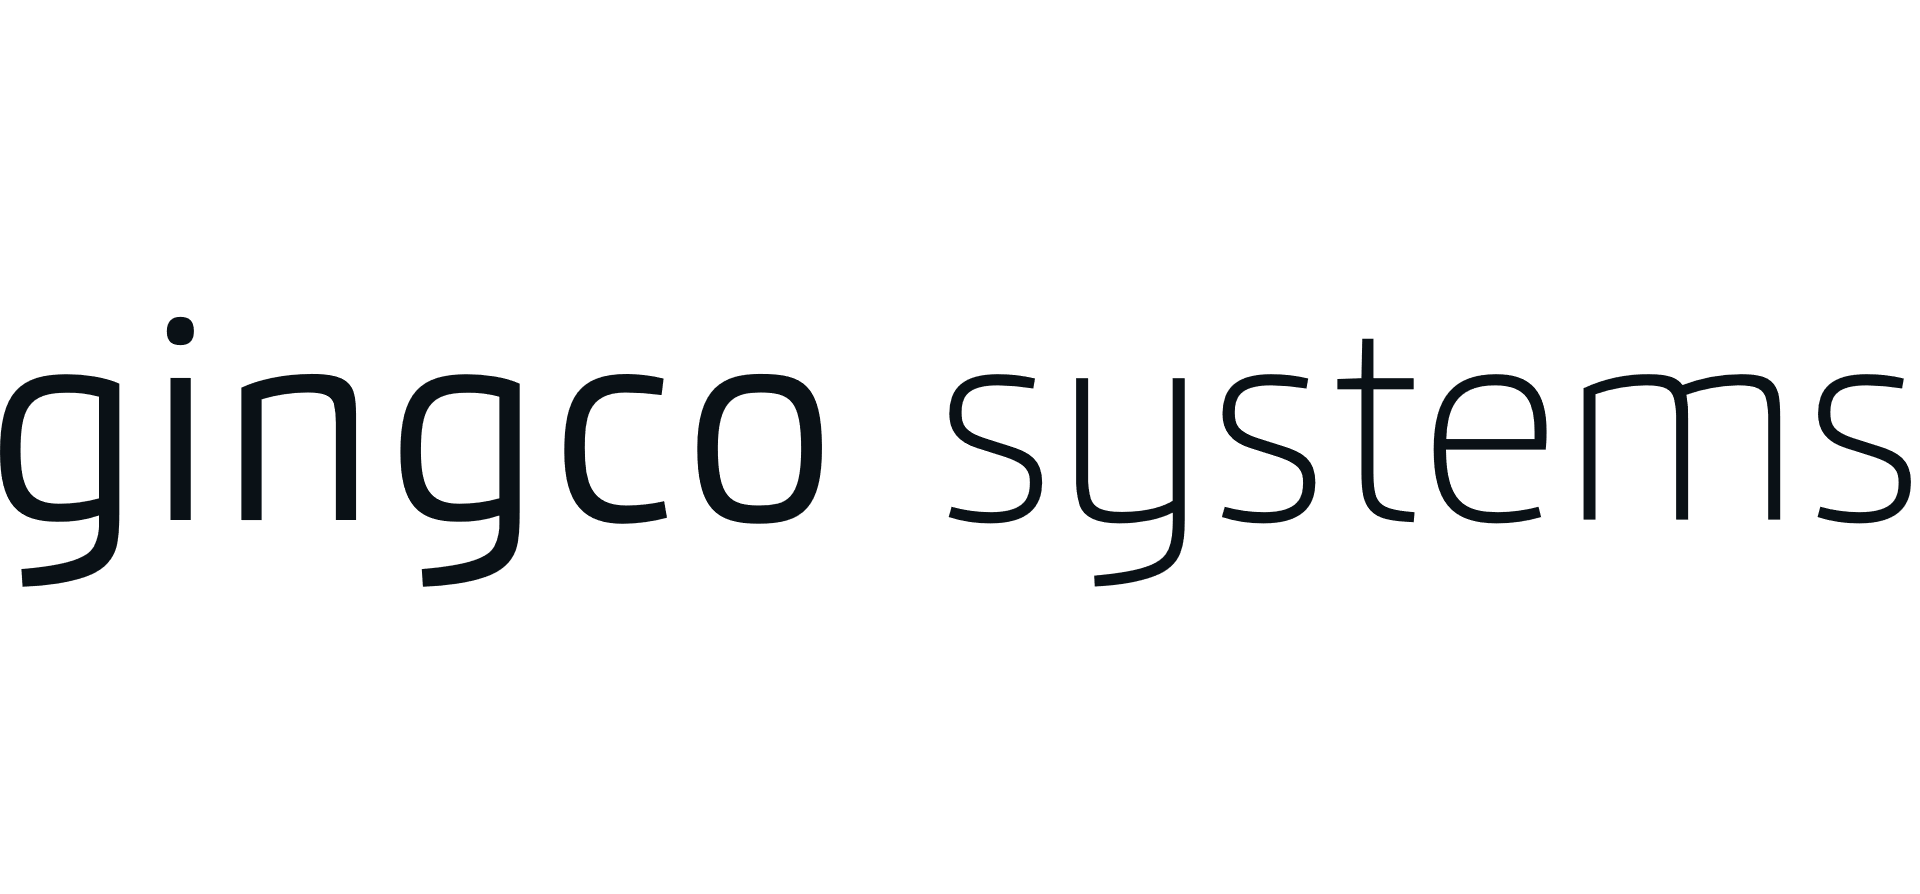 Gingco Systems logo